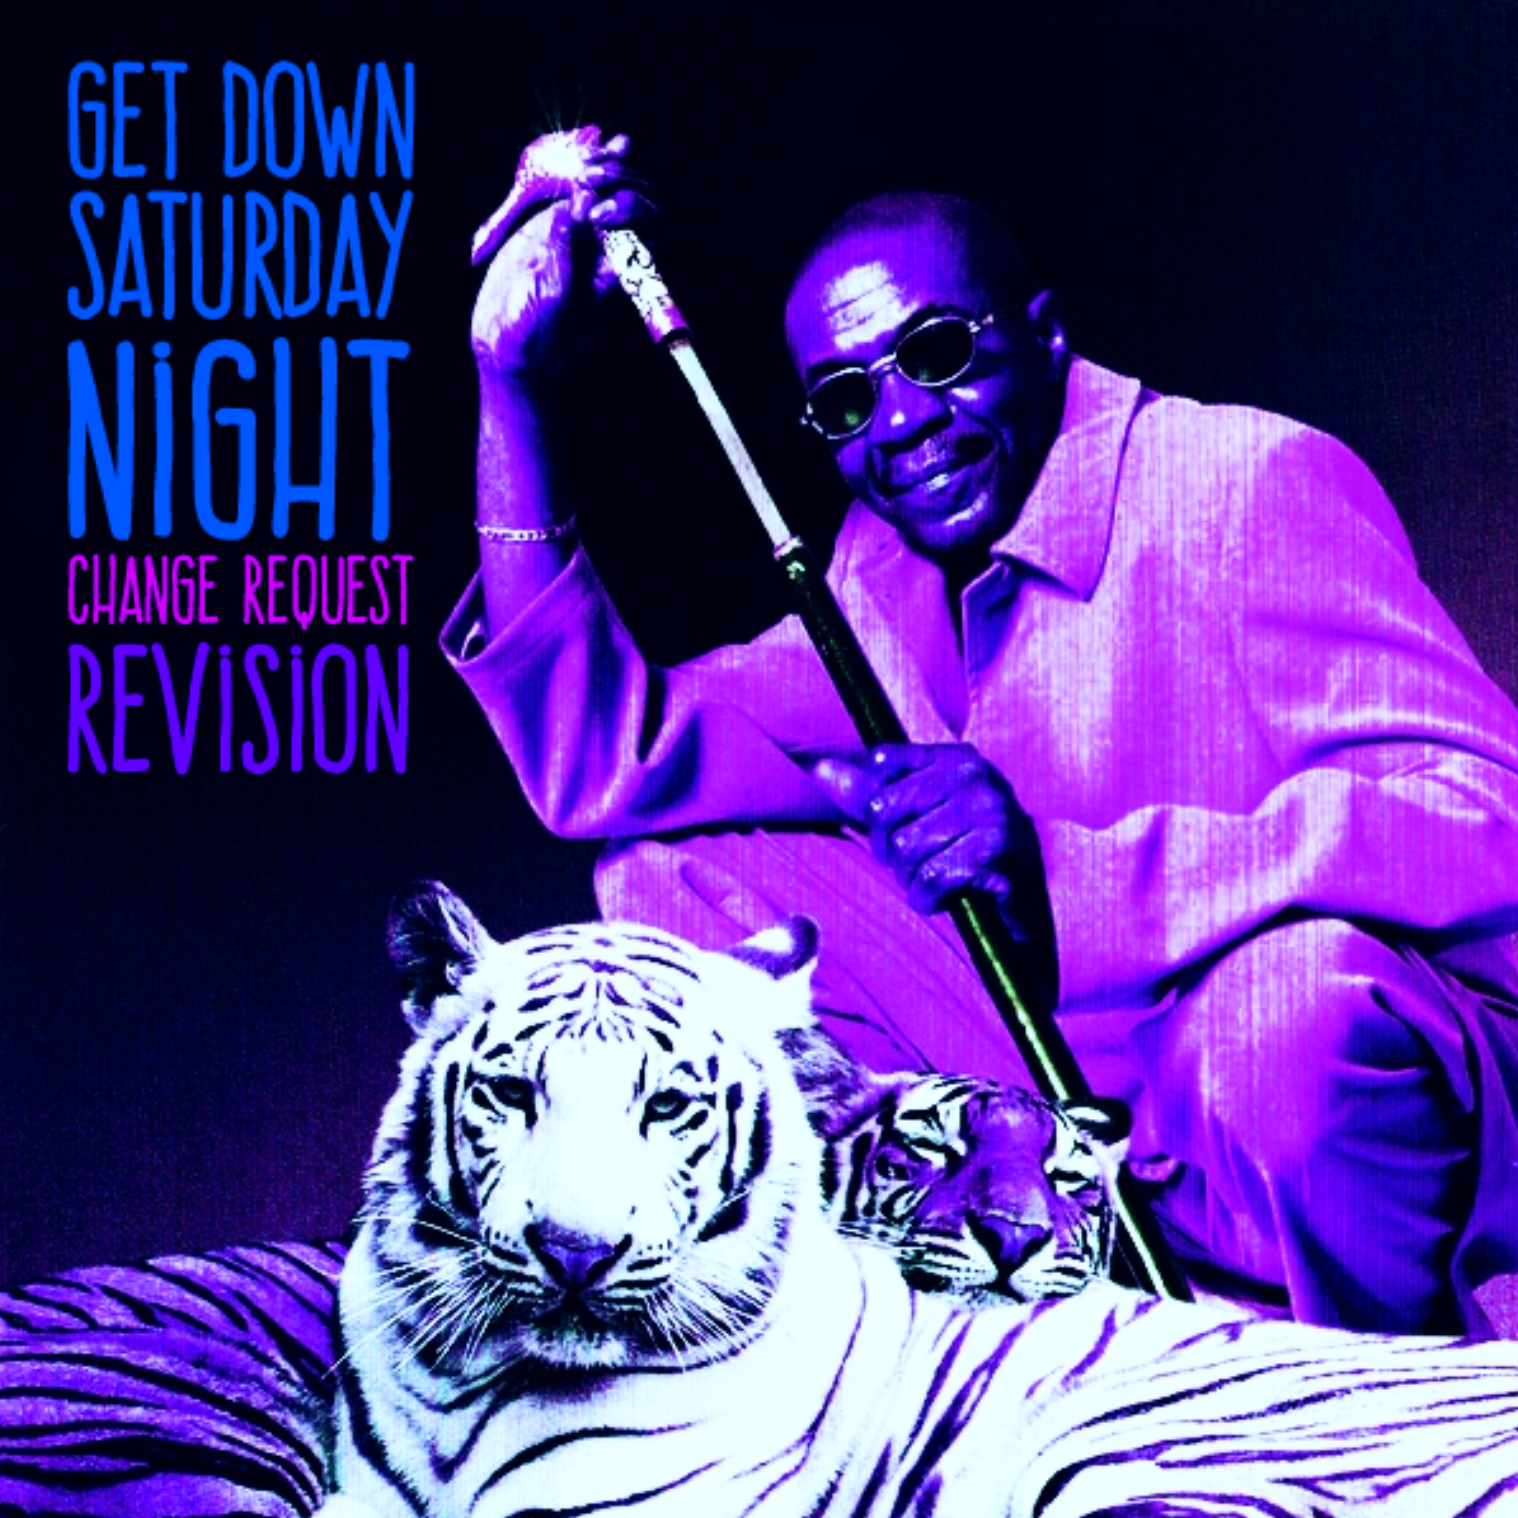 Get Down Saturday Night (Change Request ReVision)